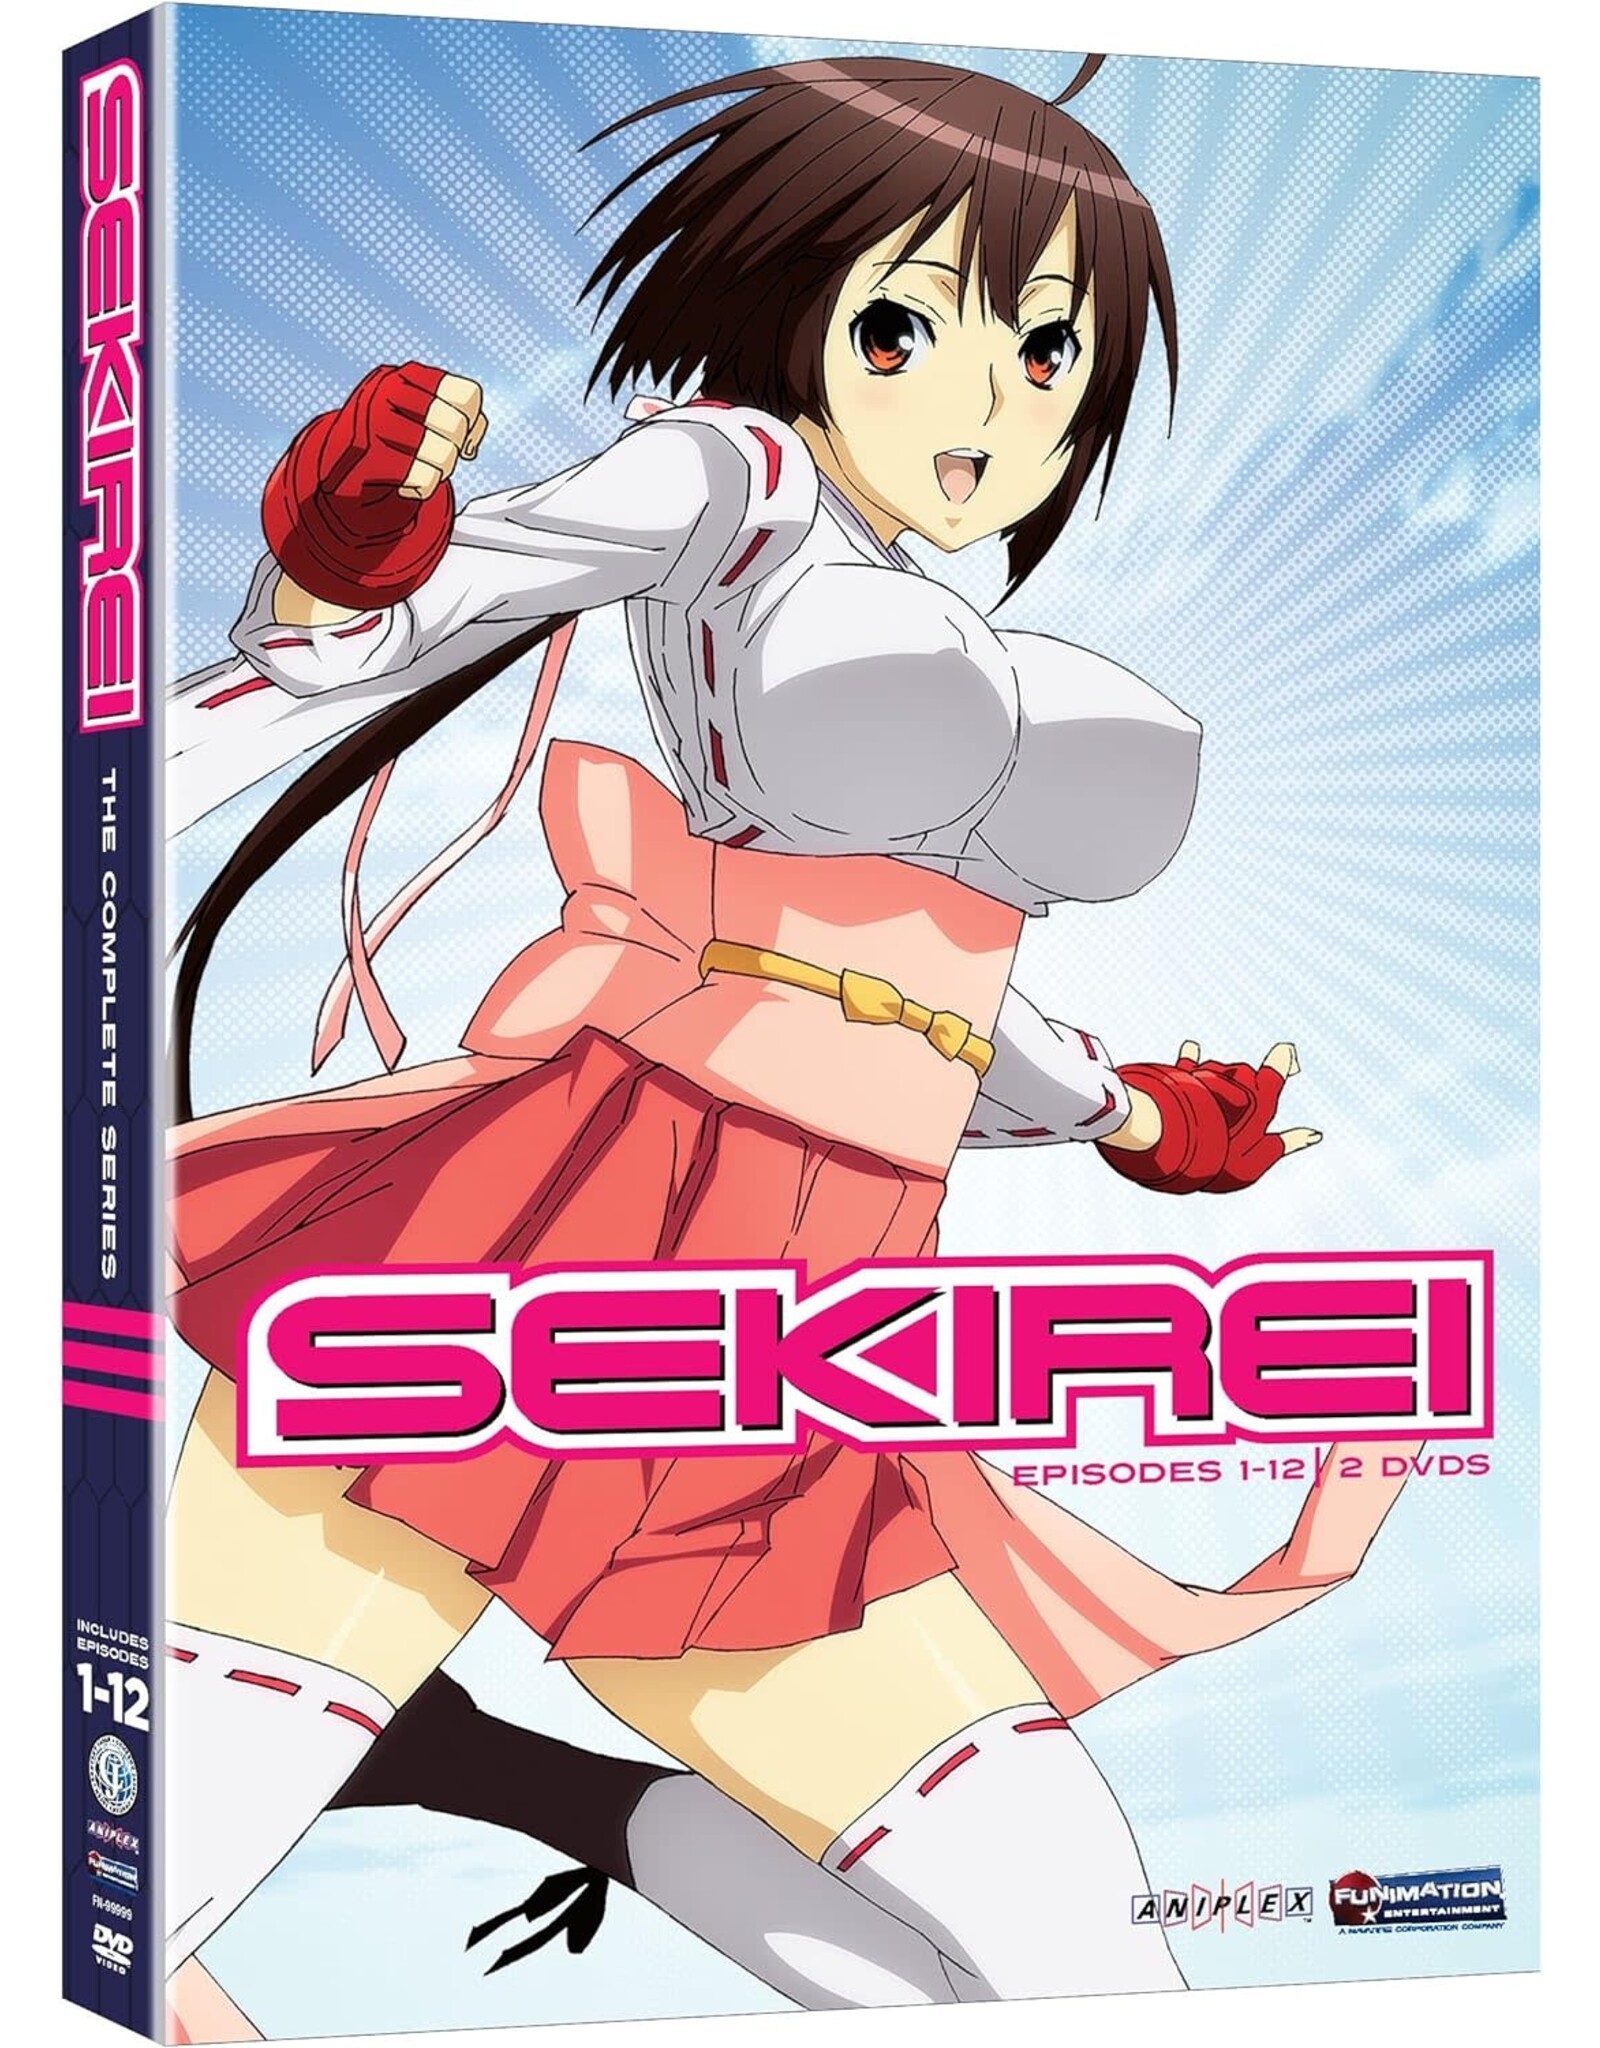 Anime & Animation Sekirei The Complete Series (Used)